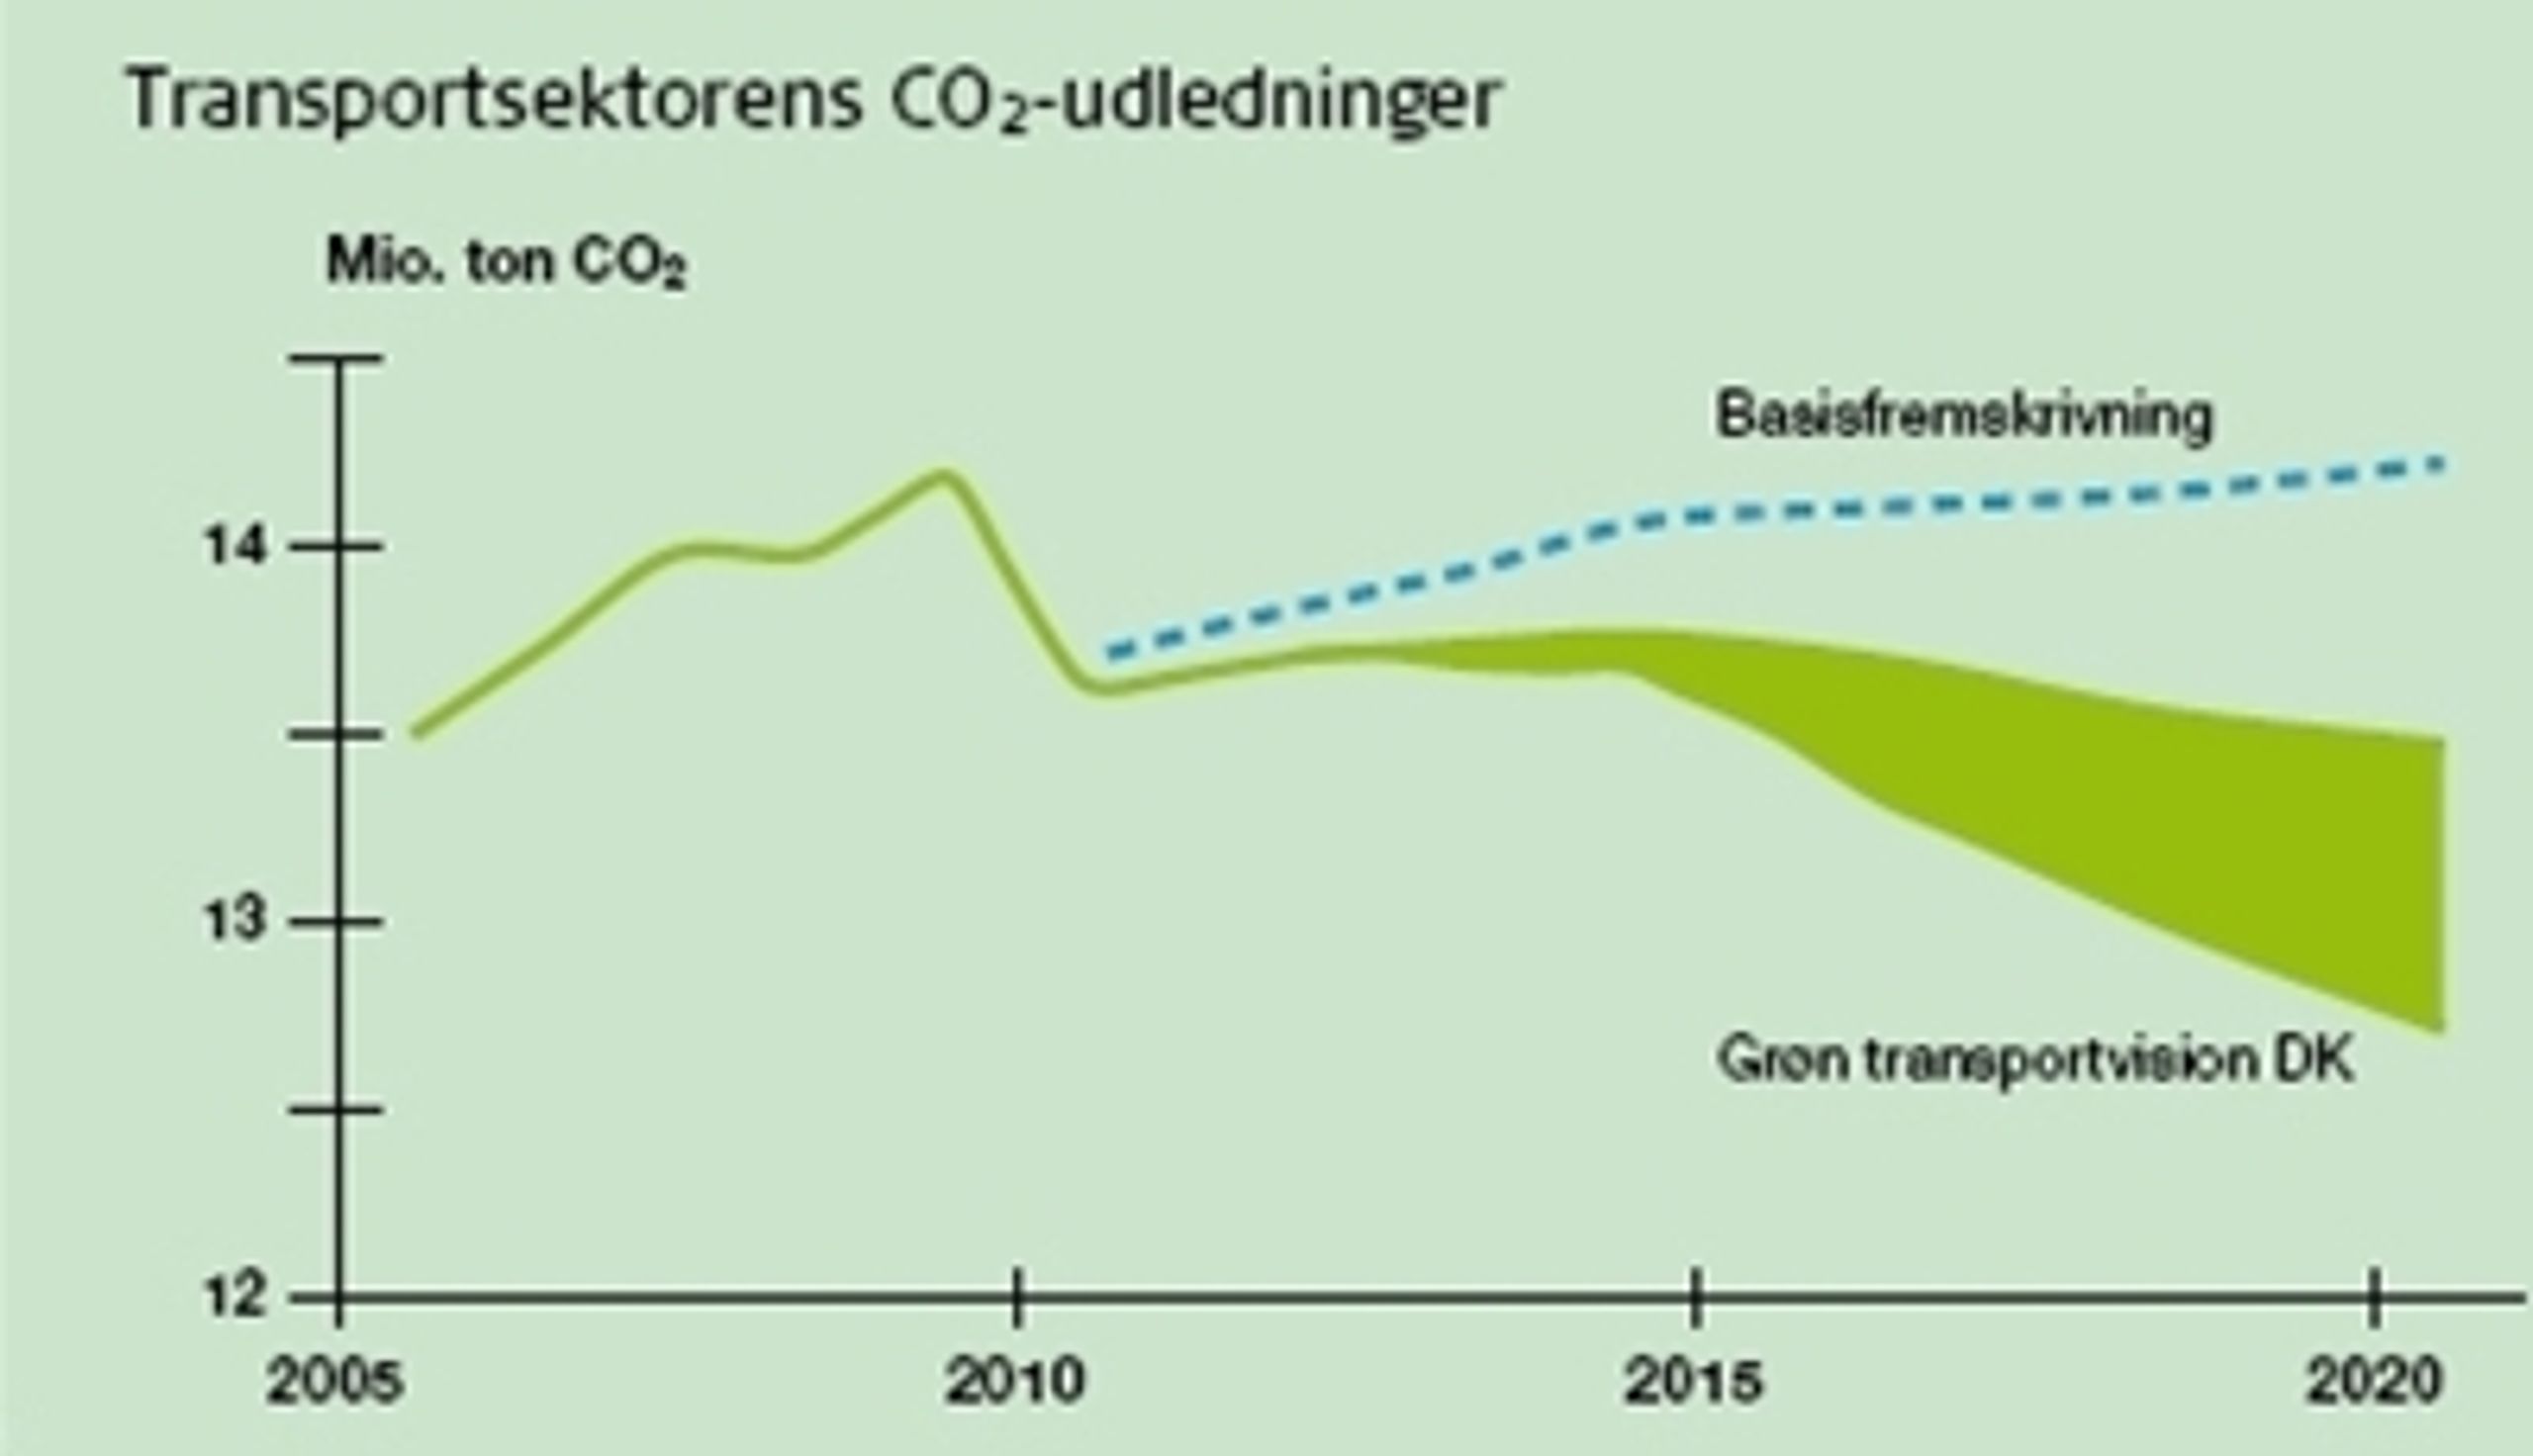 Regeringen vil kn&#230;kke kurven for transportsektorens CO2-udledning, men f&#248;rst fra 2015 forestiller regeringen sig, at kurven for CO2-udledning vil dale.